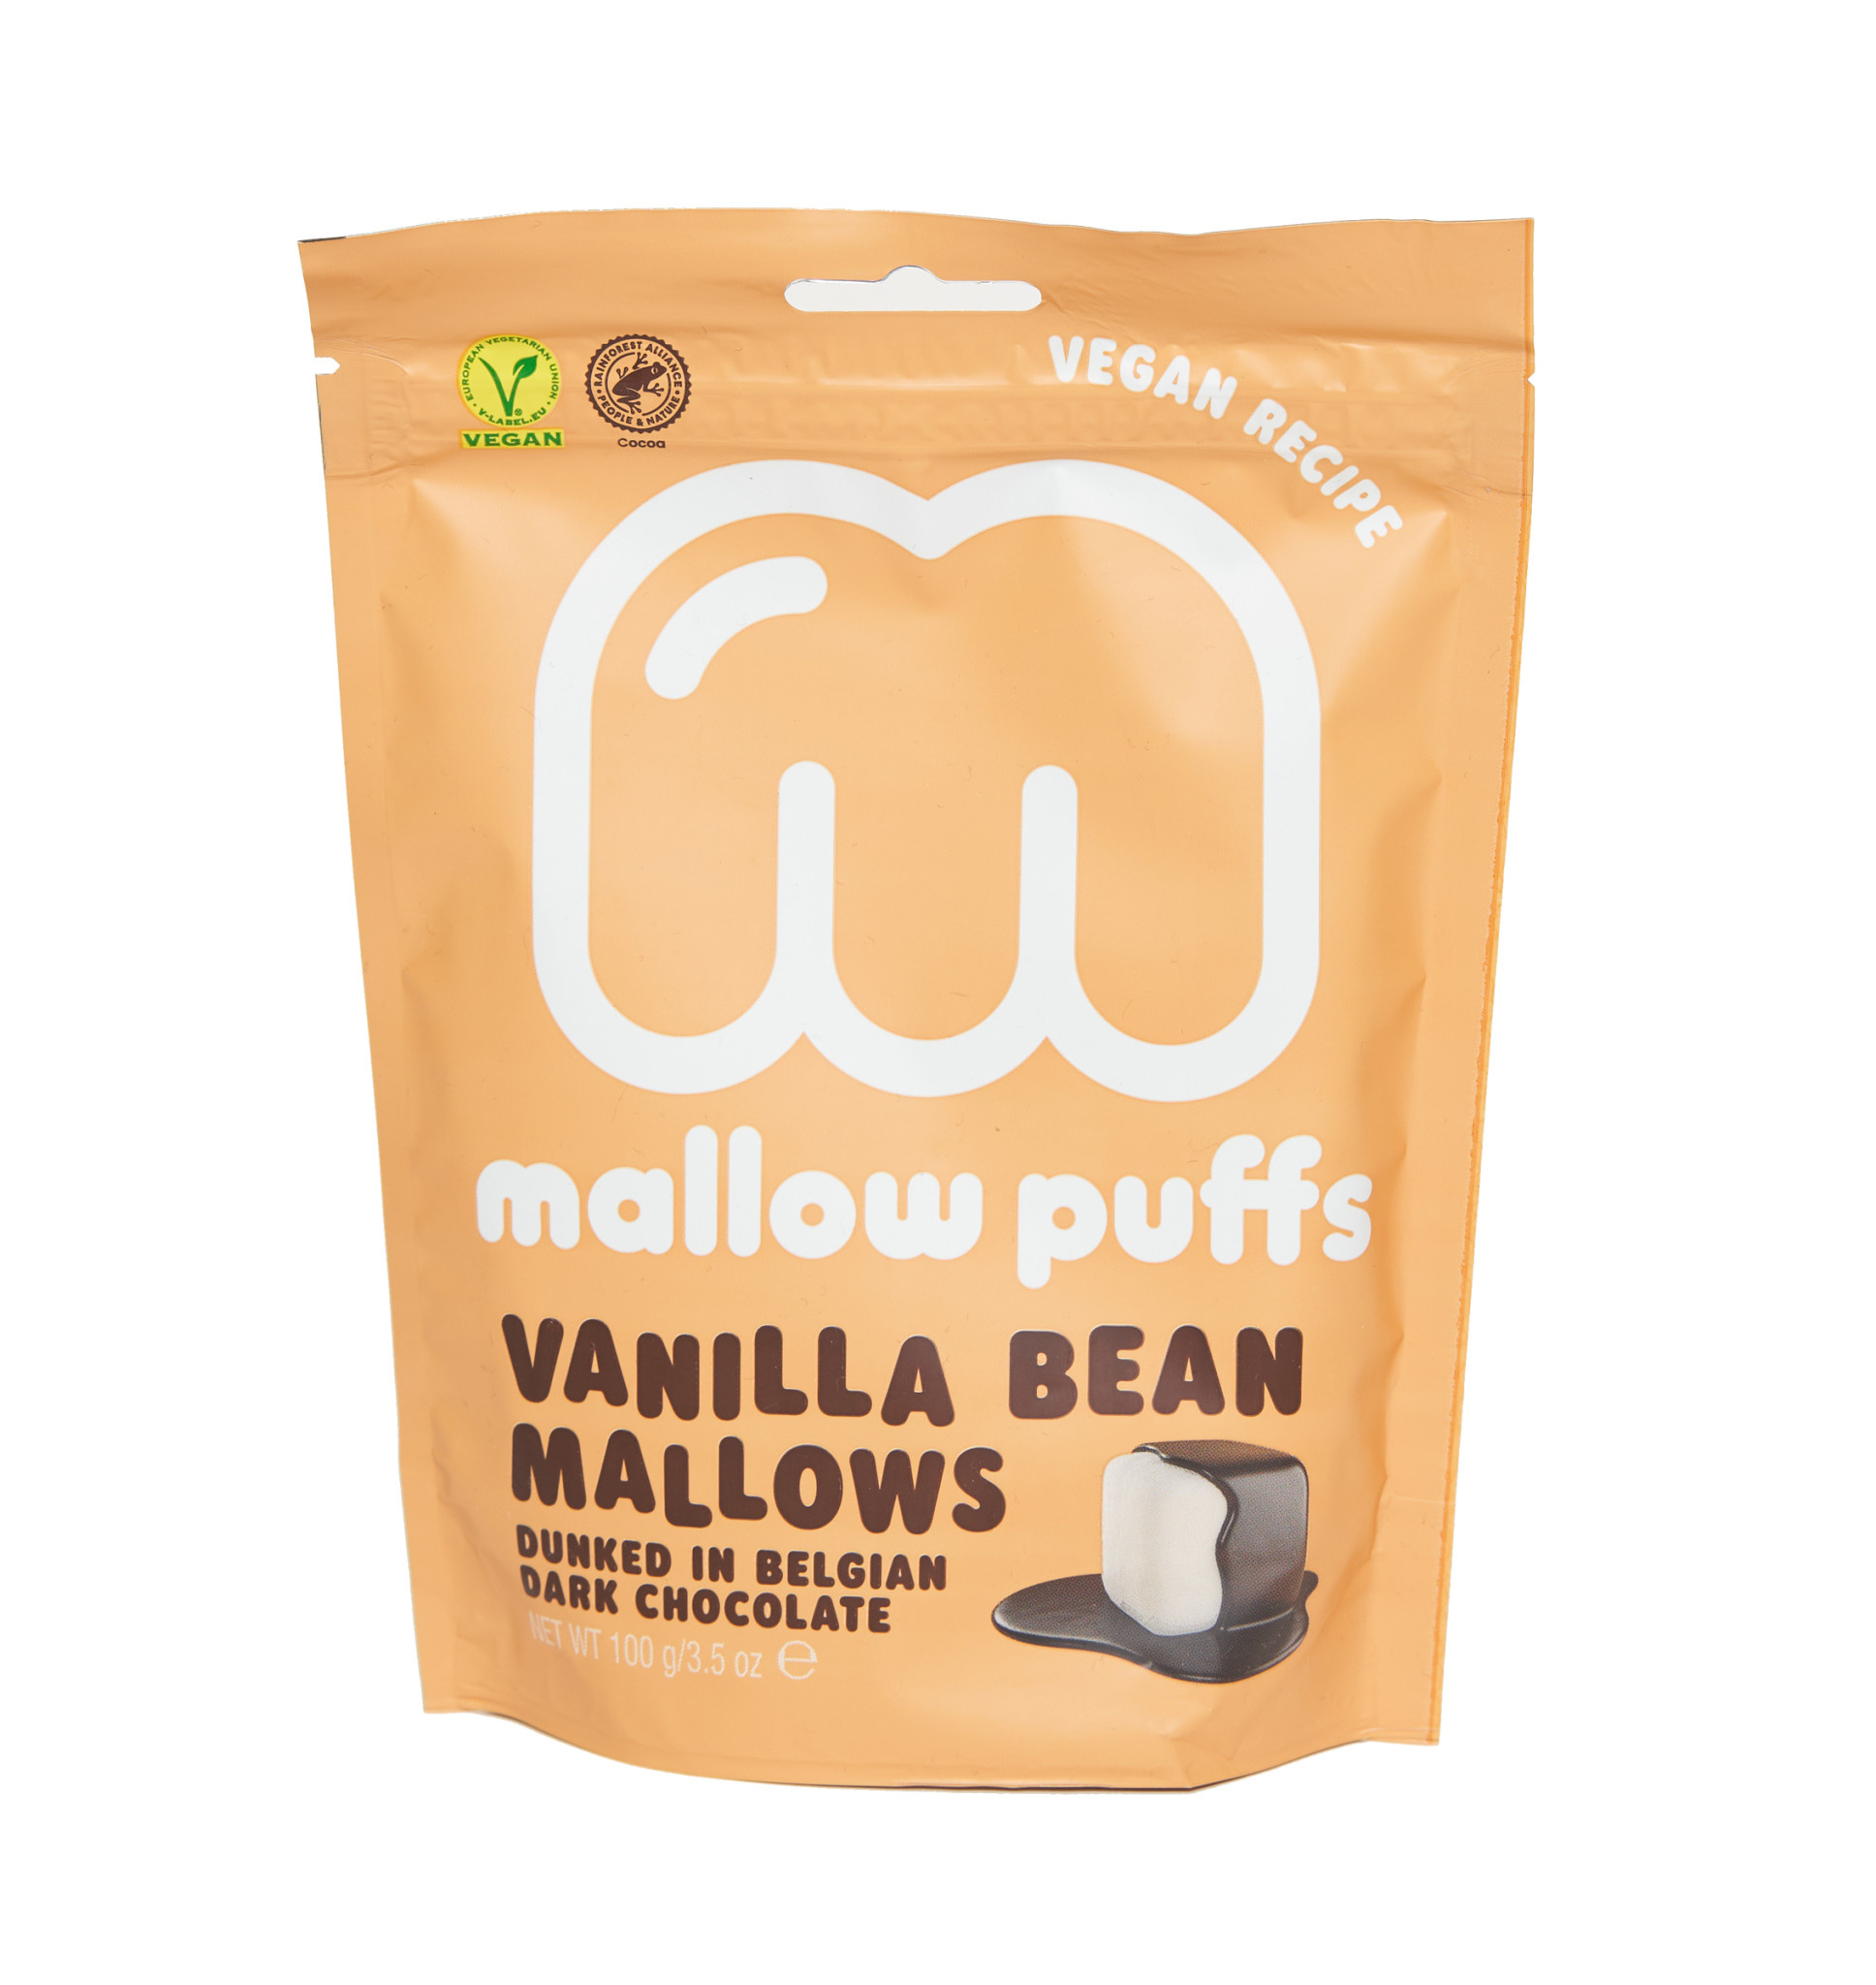 BARÚ Mallow Puffs - Vegan Vanilla Bean Mallows dunked in Belgian dark chocolate